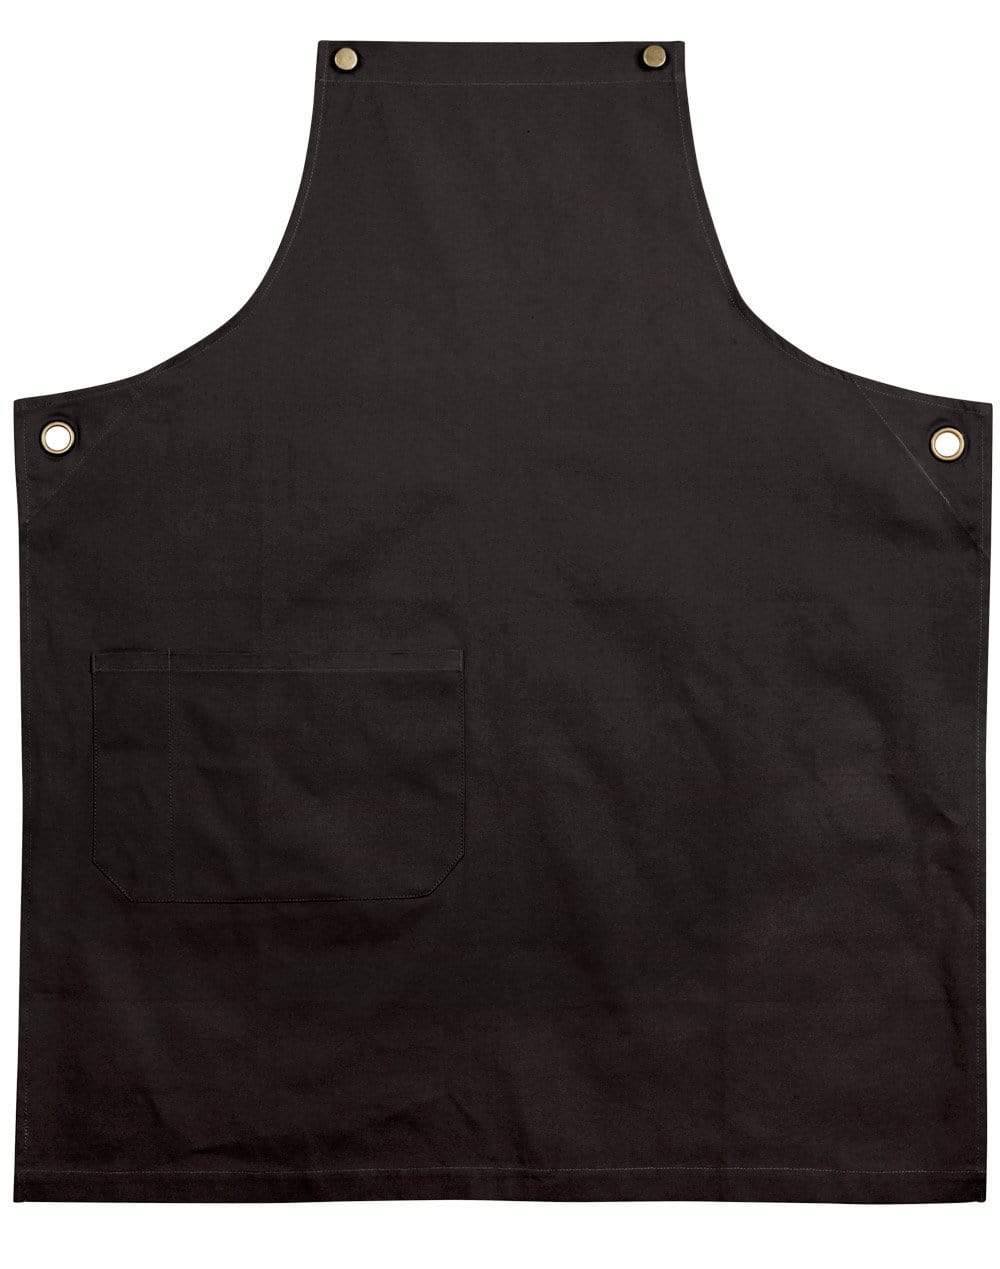 Australian Industrial Wear Hospitality & Chefwear Charcoal BRUNSWICK bib apron m3200